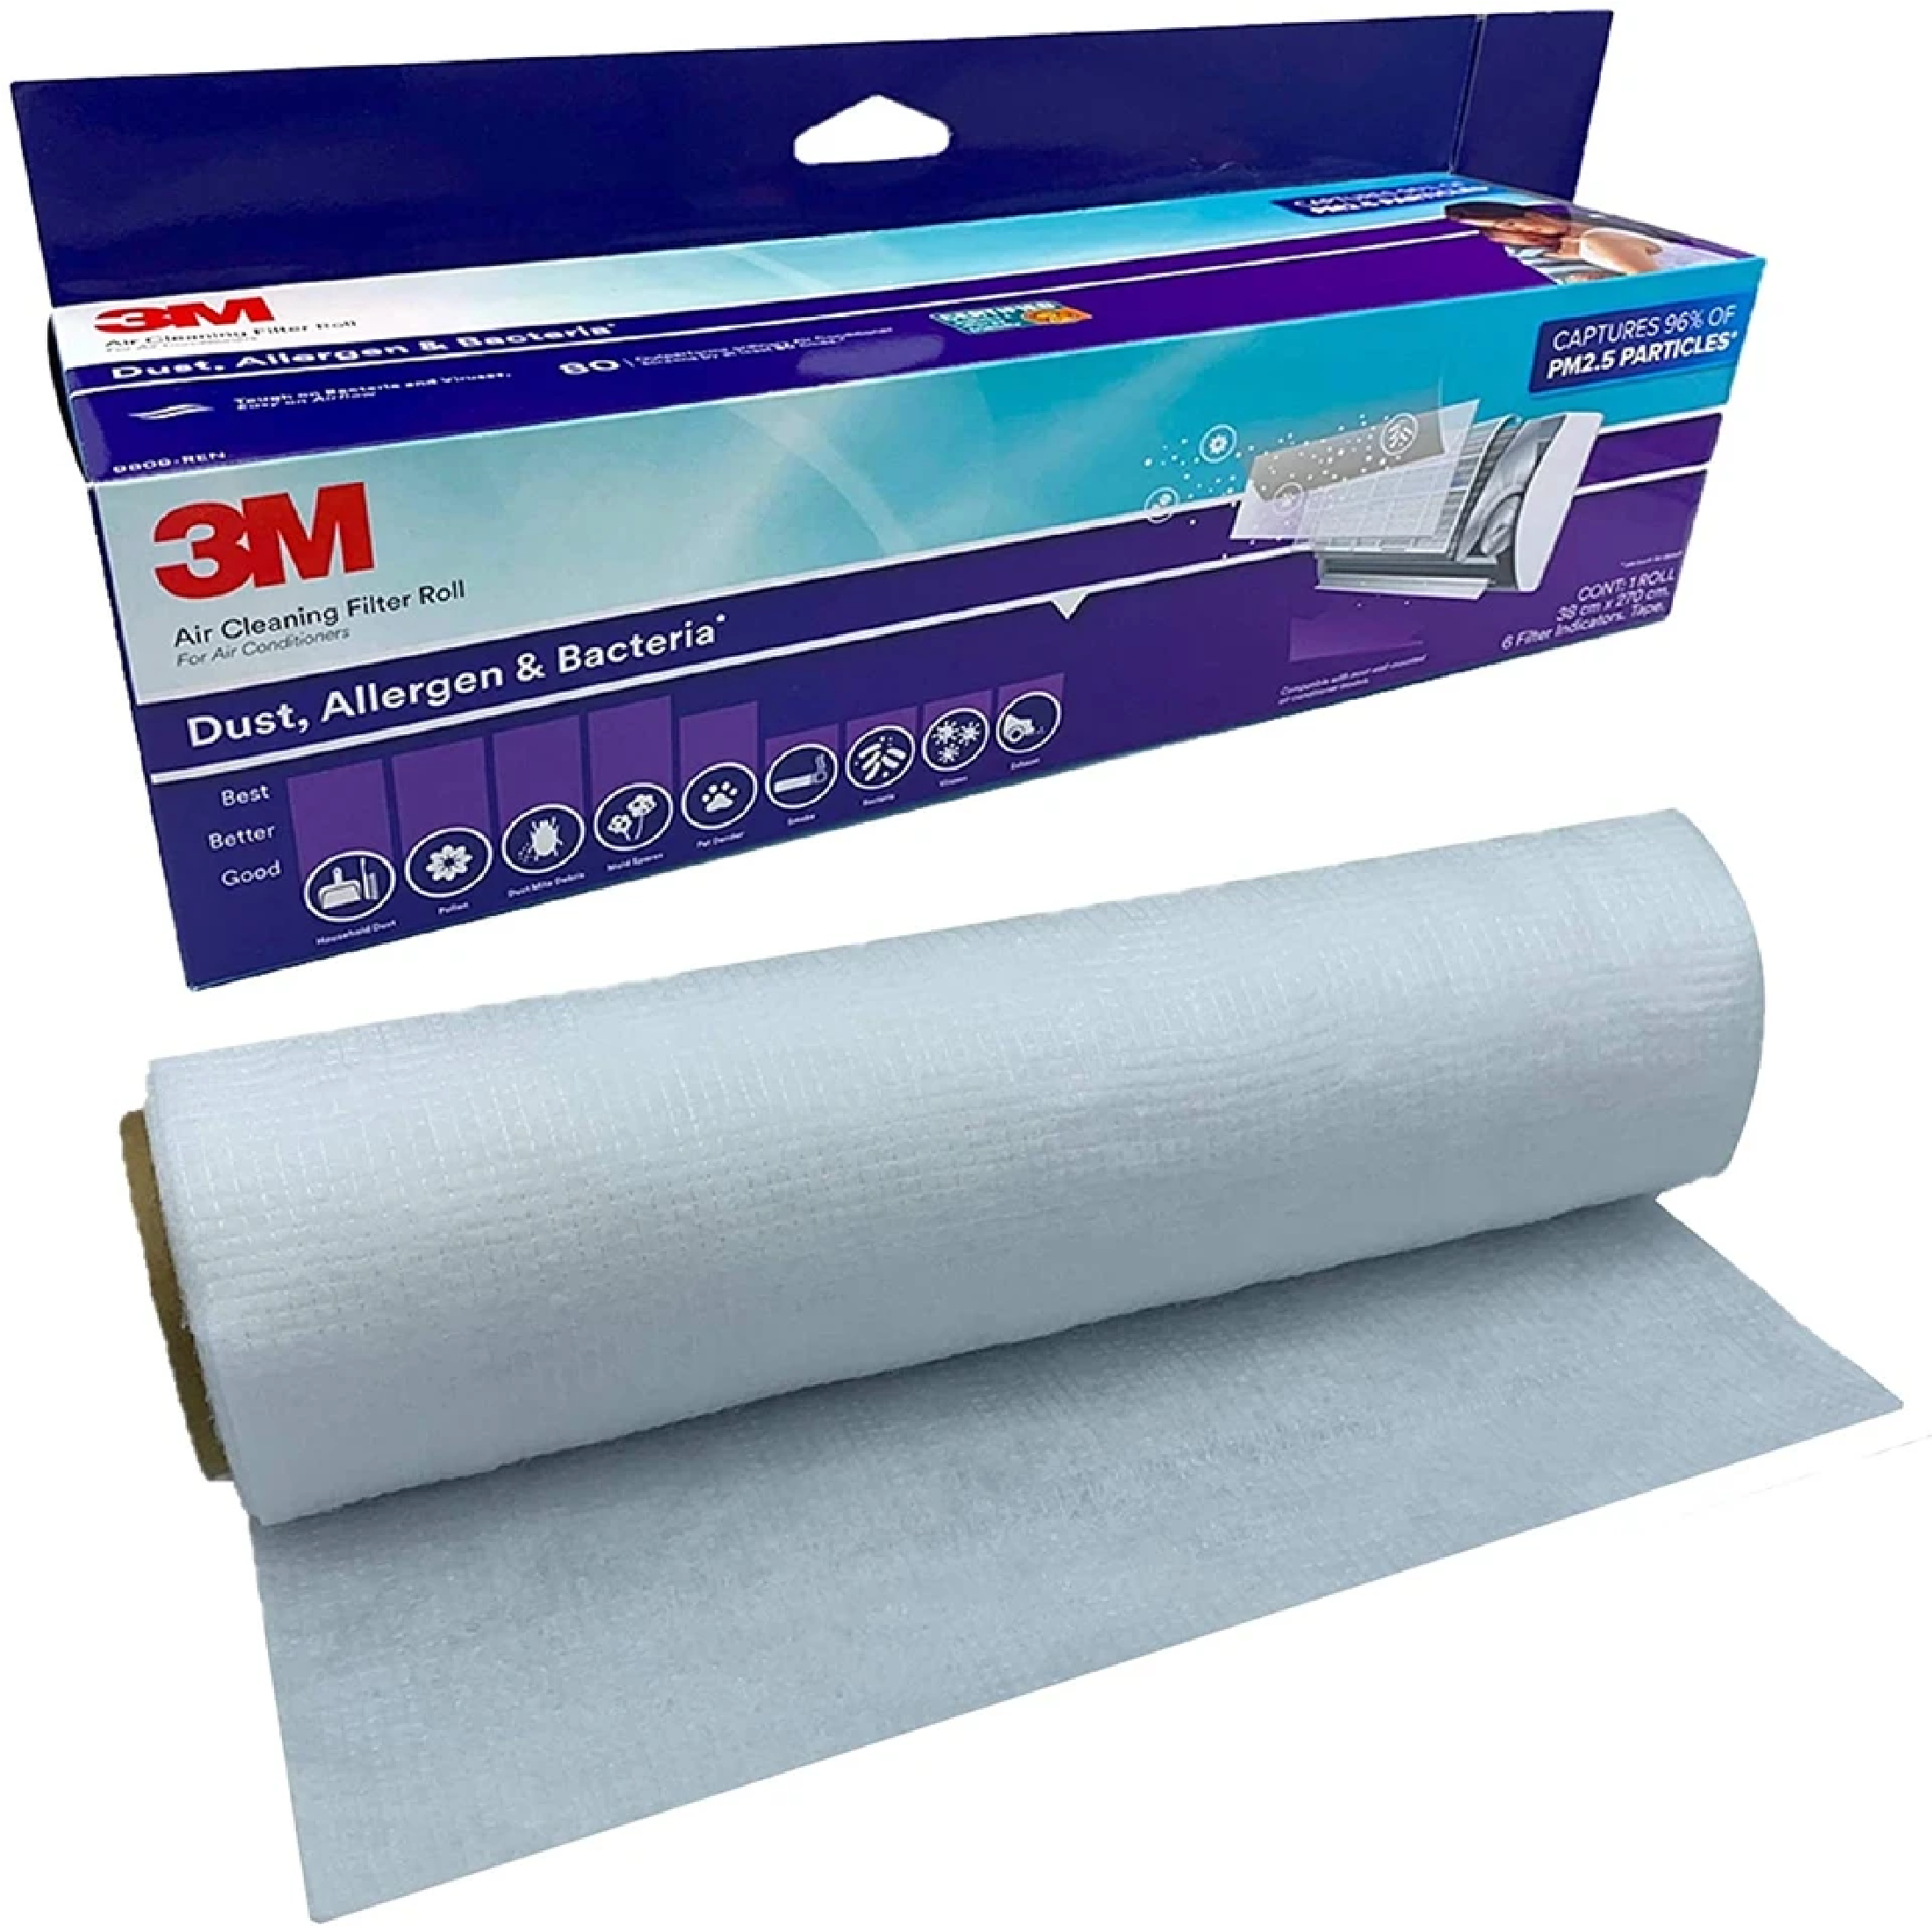 3M Aircon Filter Dust, Allergen & Bacteria 38 X 270CM (Roll)